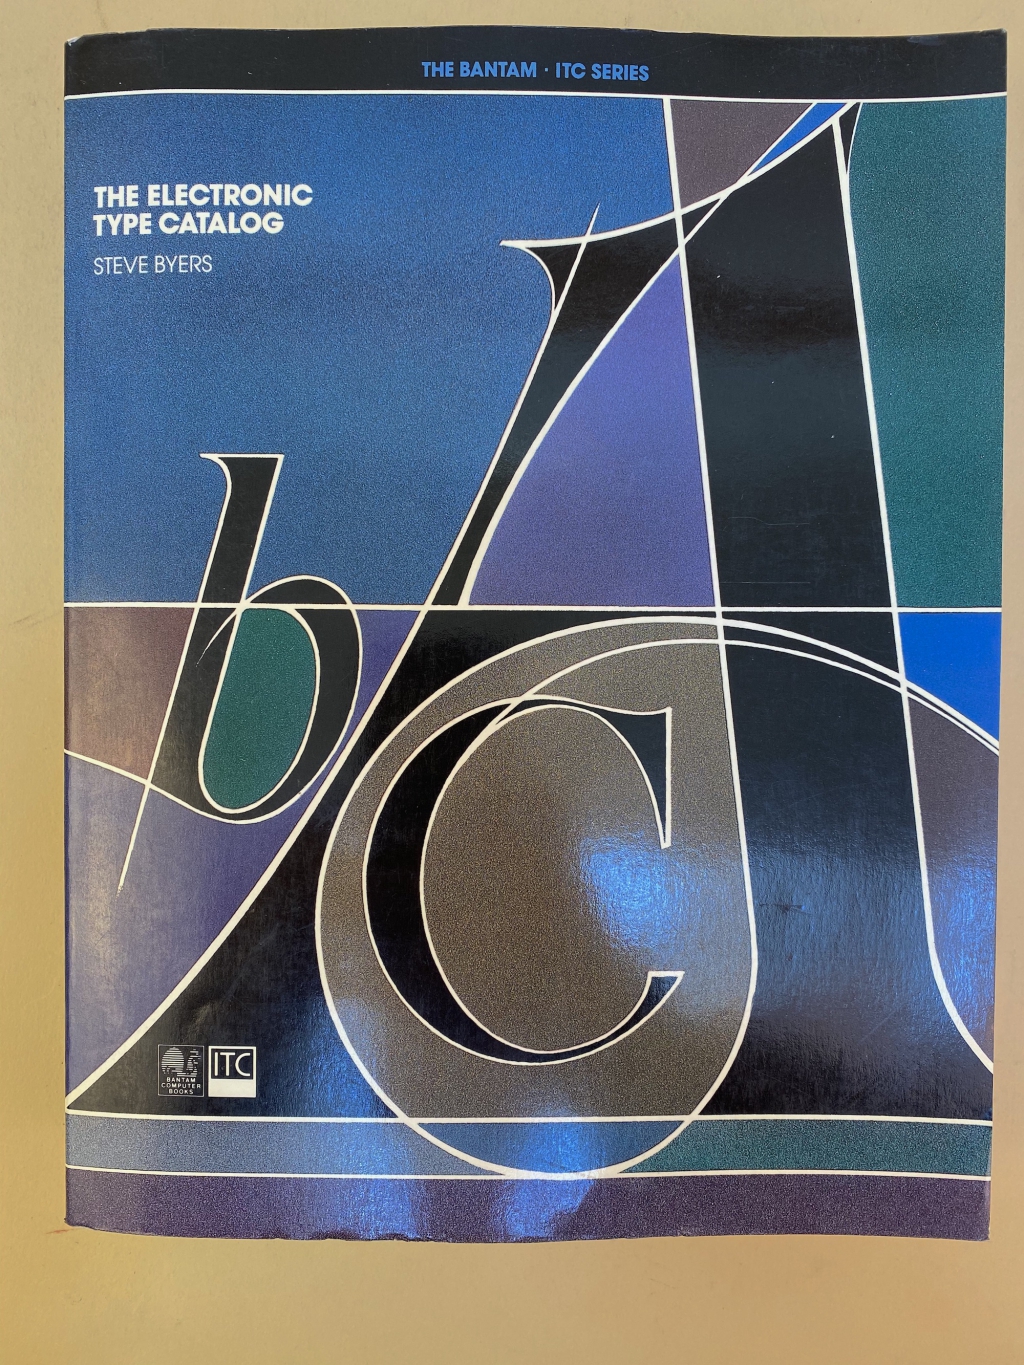 Cover of Bantam ITC electronic type catalogue